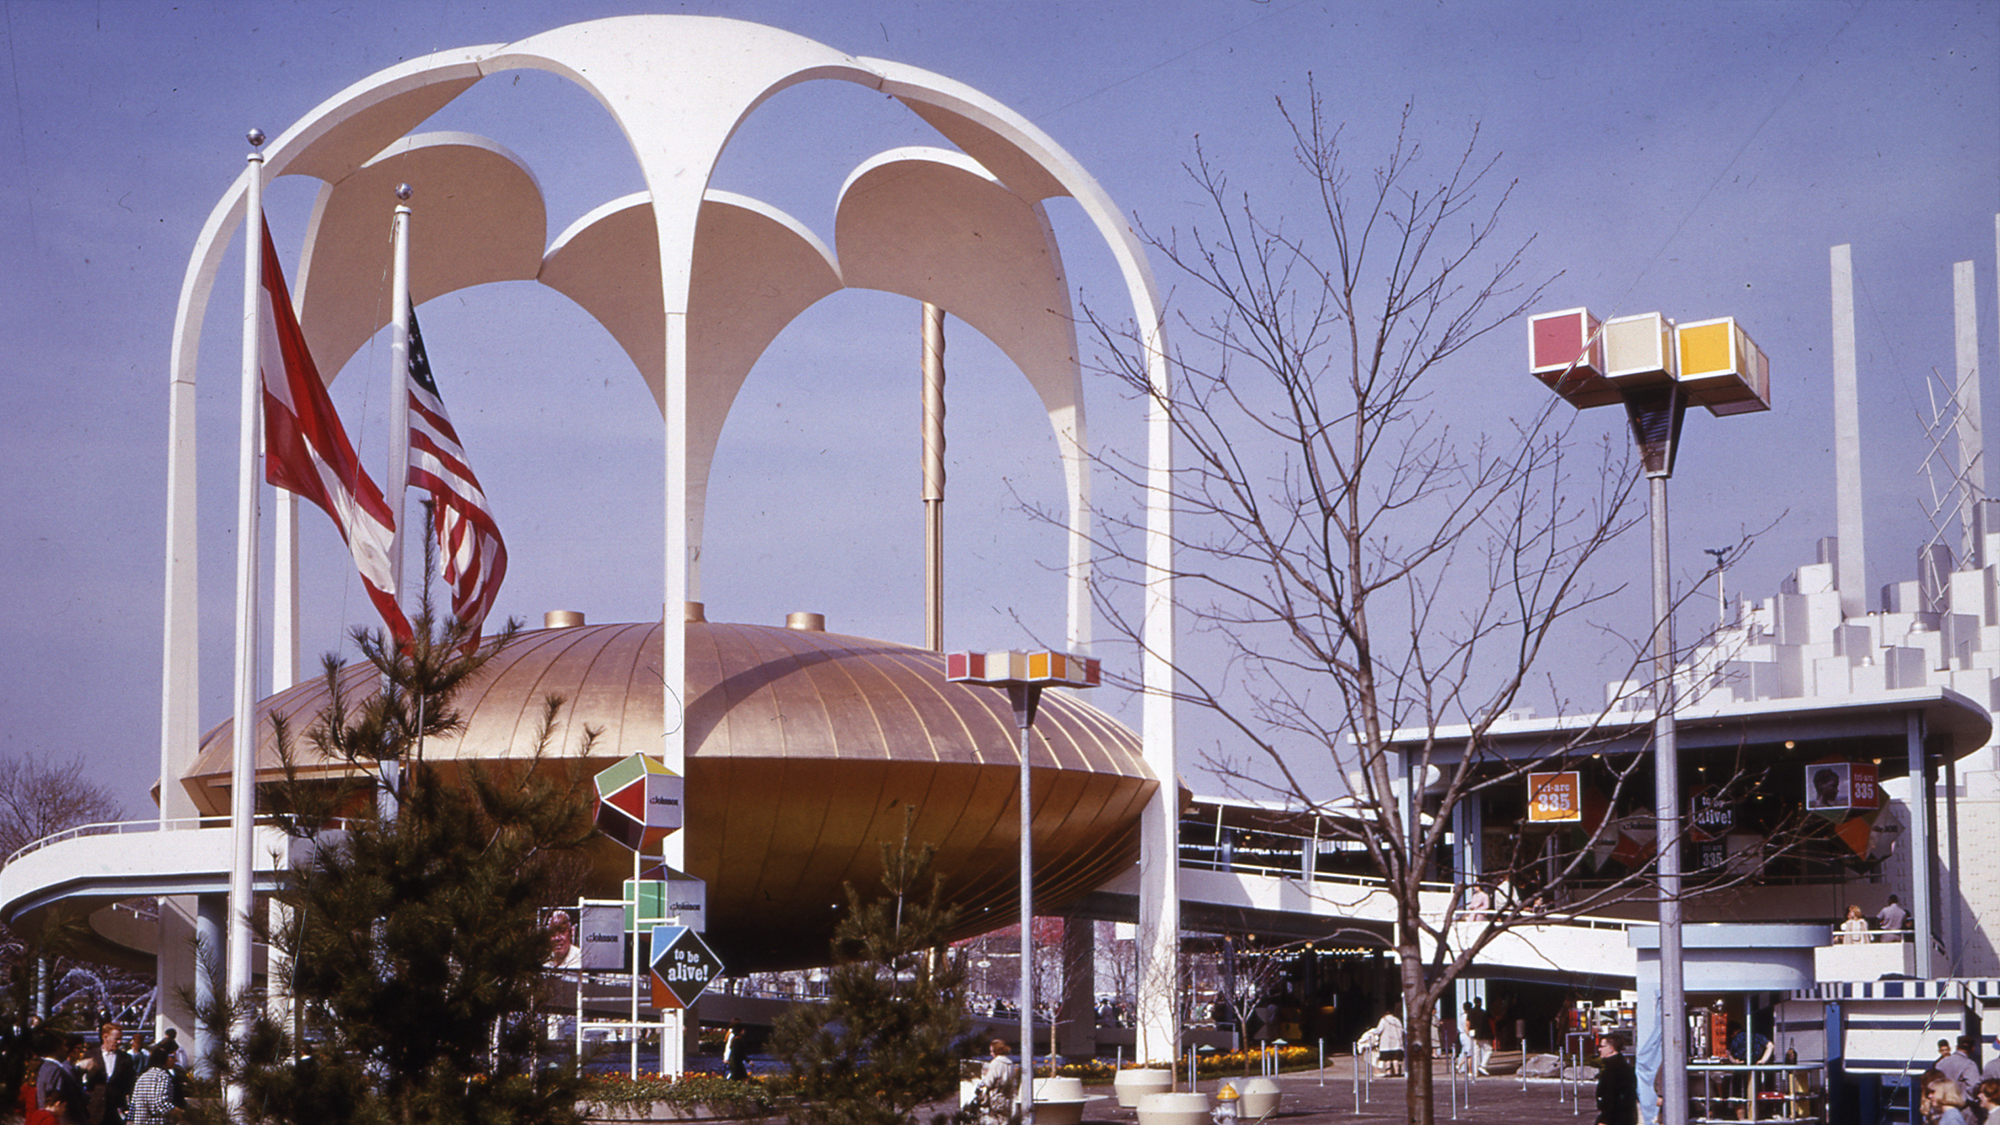 The 1964 SC Johnson Pavilion, now known as The Golden Rondelle Theatre